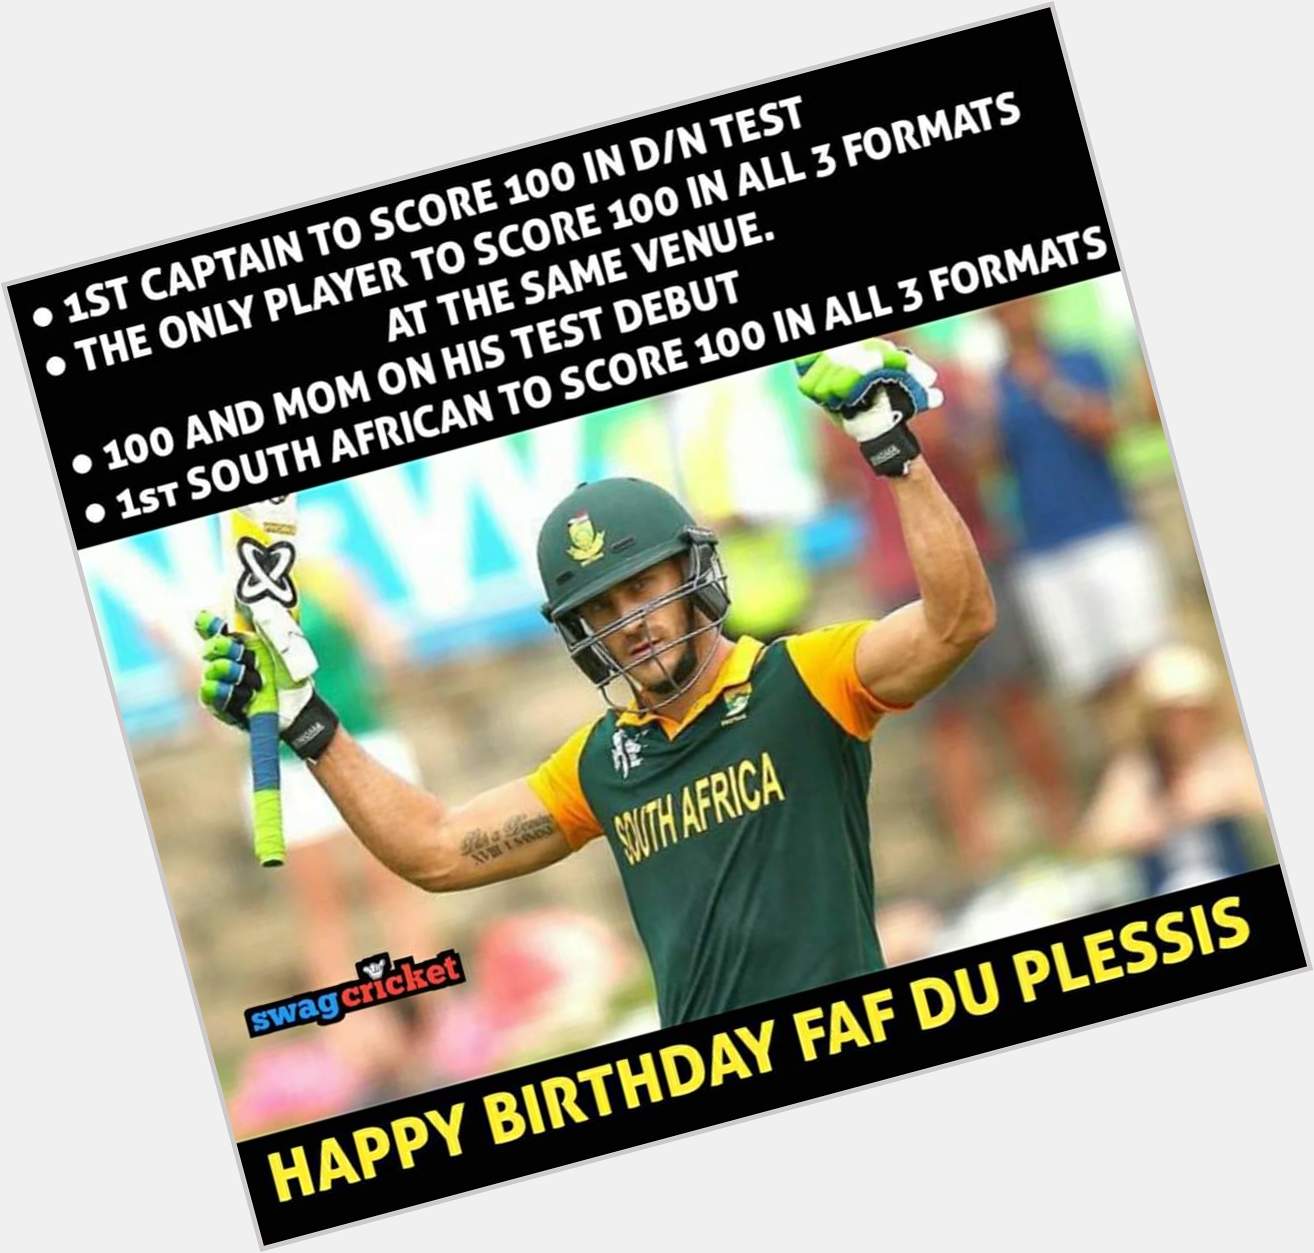 Happy Birthday Faf Du Plessis! 